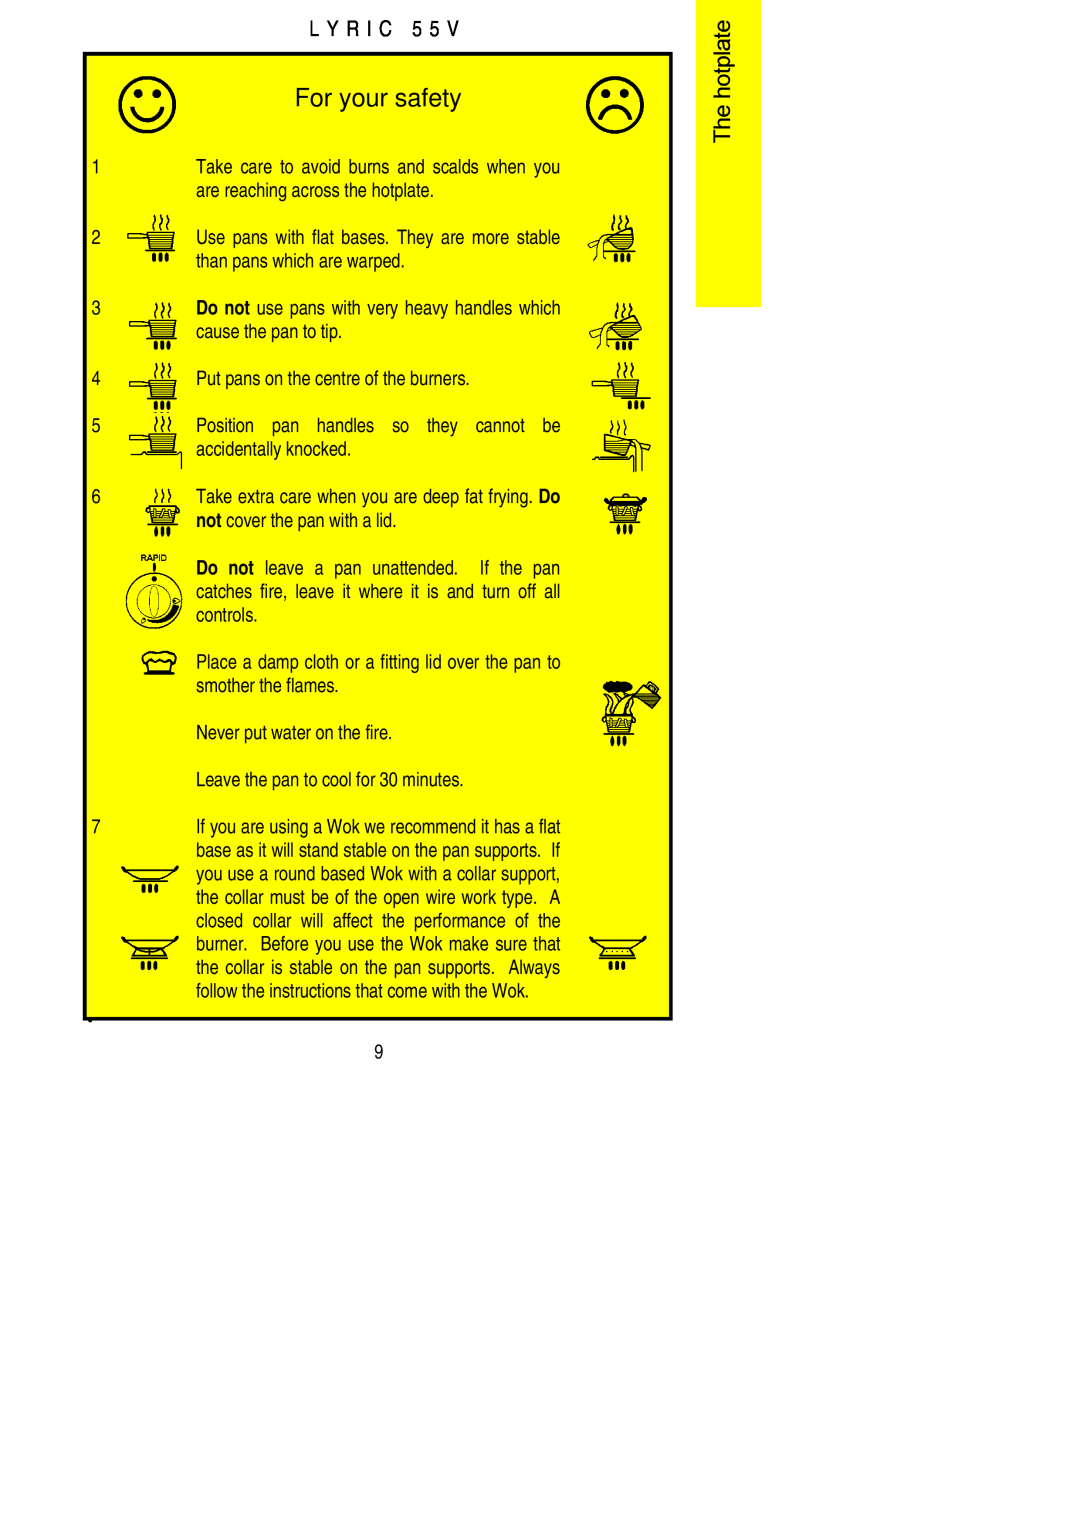 Electrolux 55V installation instructions For your safety, L Y R I C 5 5 